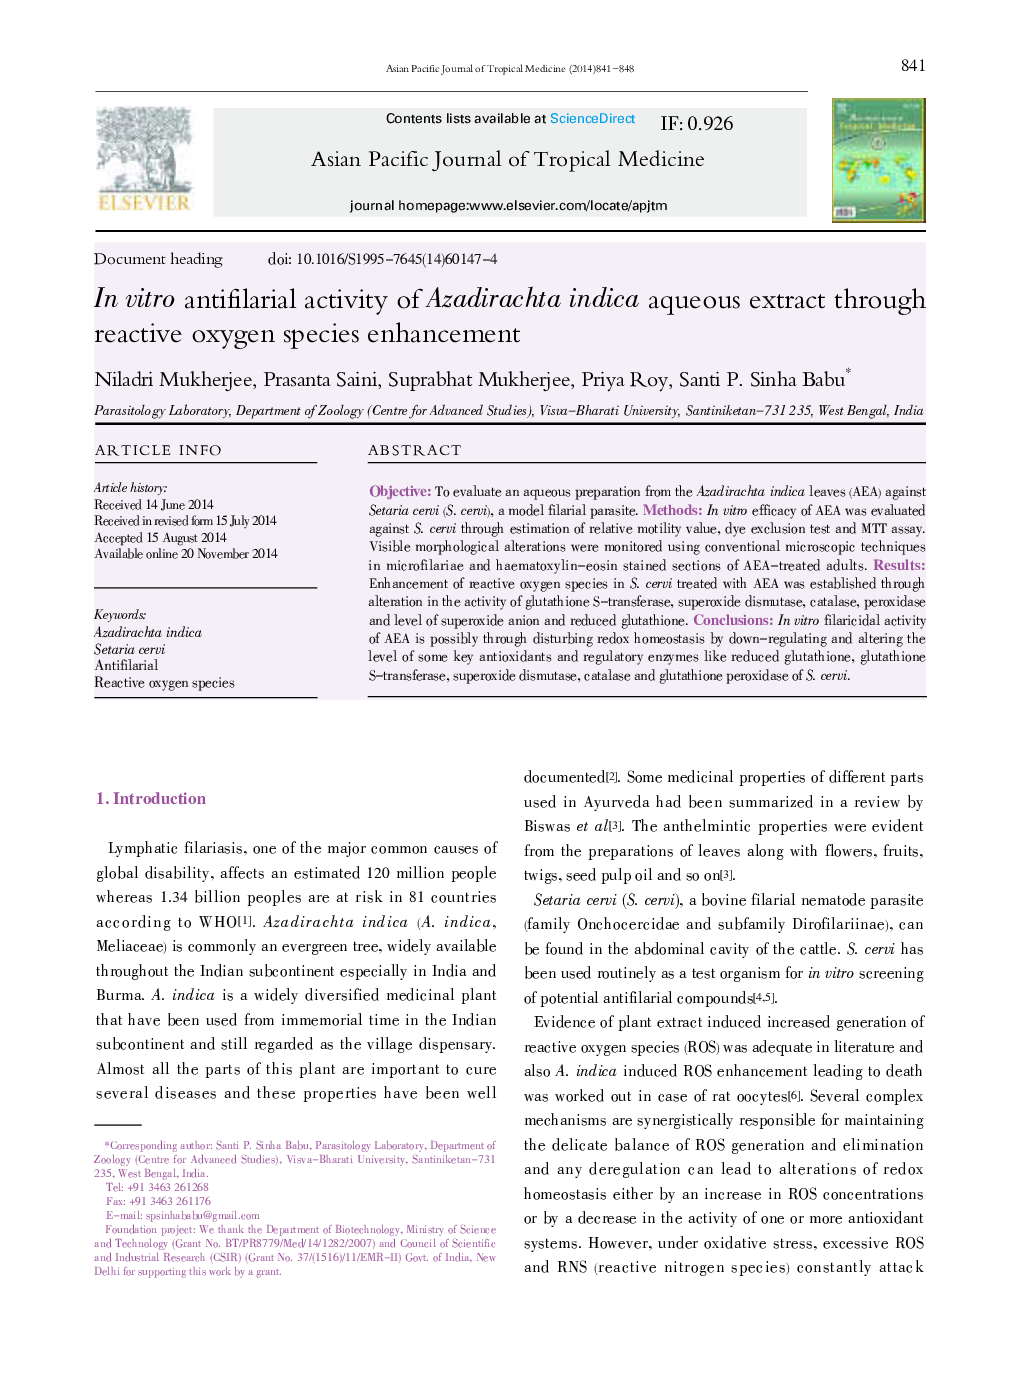 In vitro antifilarial activity of Azadirachta indica aqueous extract through reactive oxygen species enhancement 